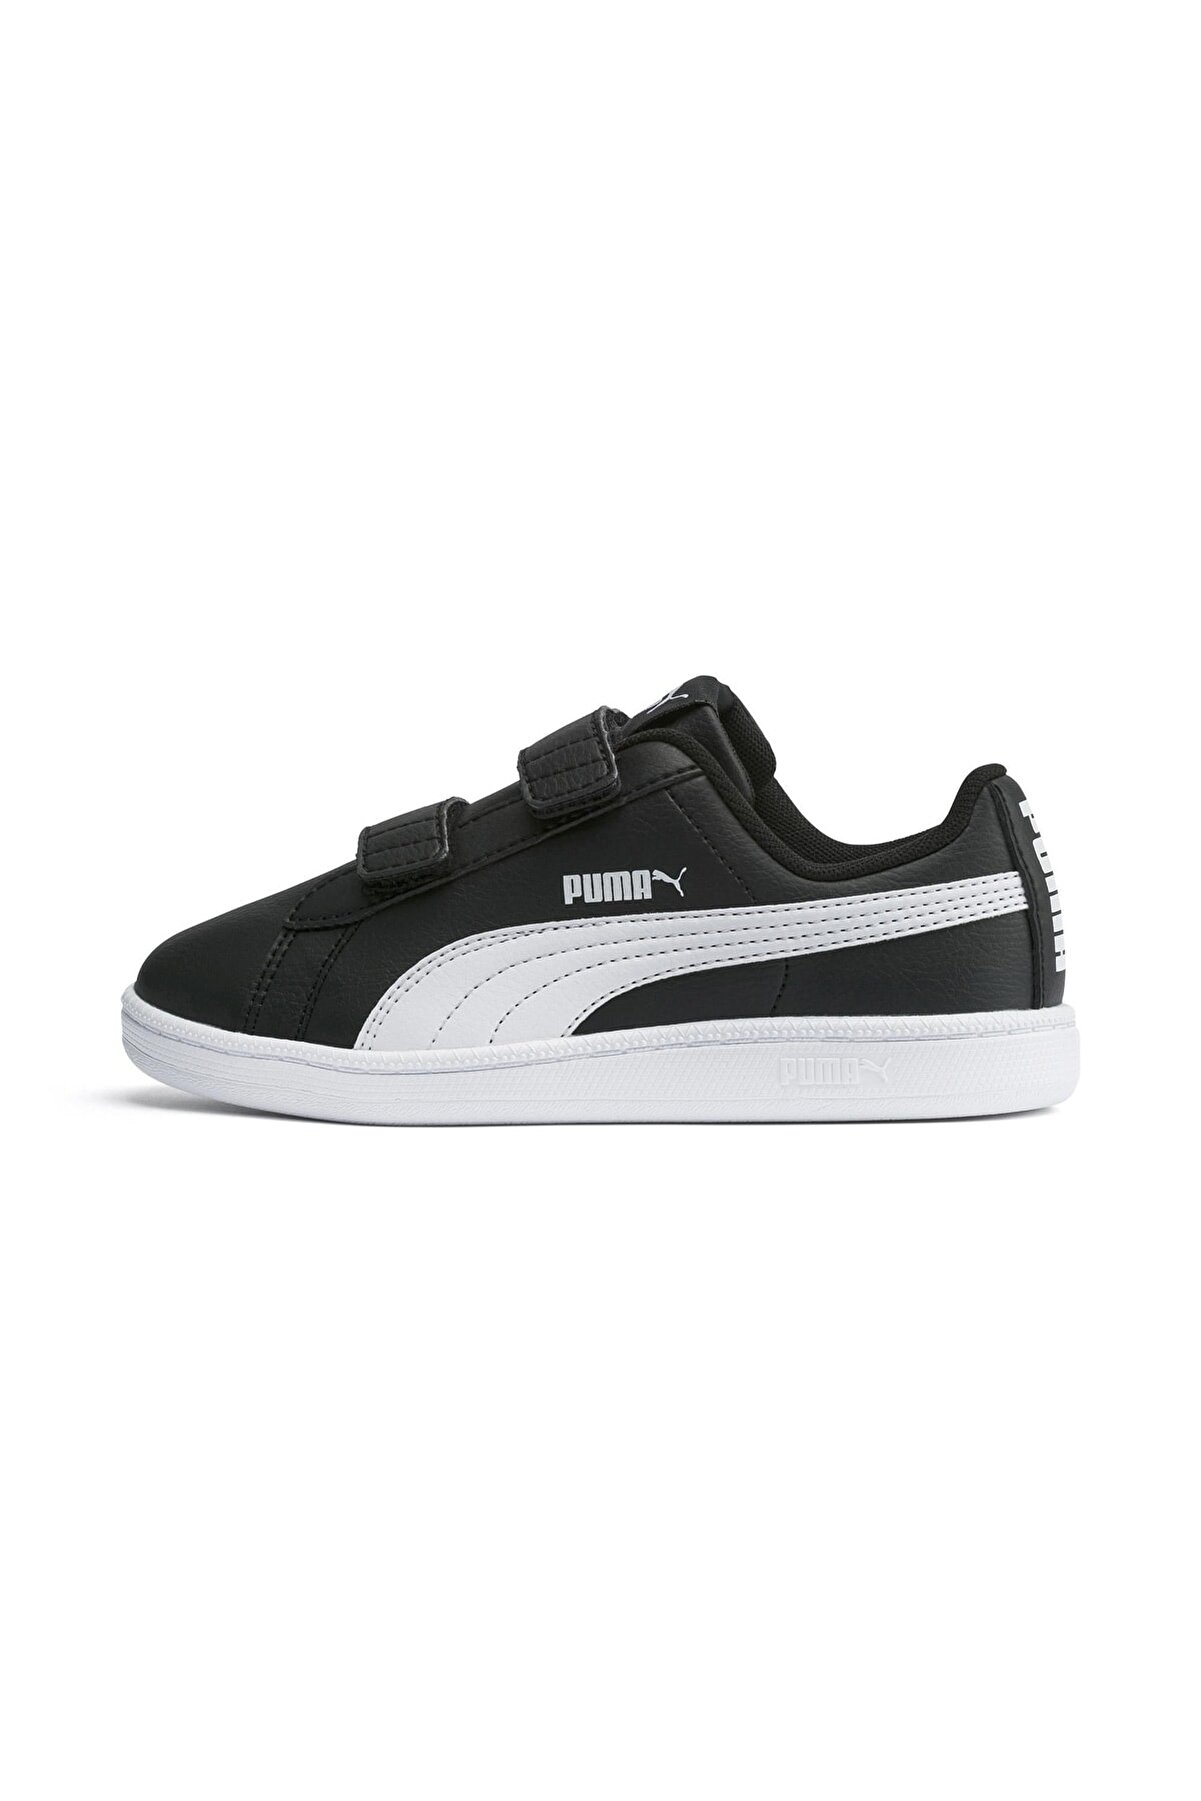 Puma Up V PS - Unisex Siyah Çocuk Spor Ayakkabı